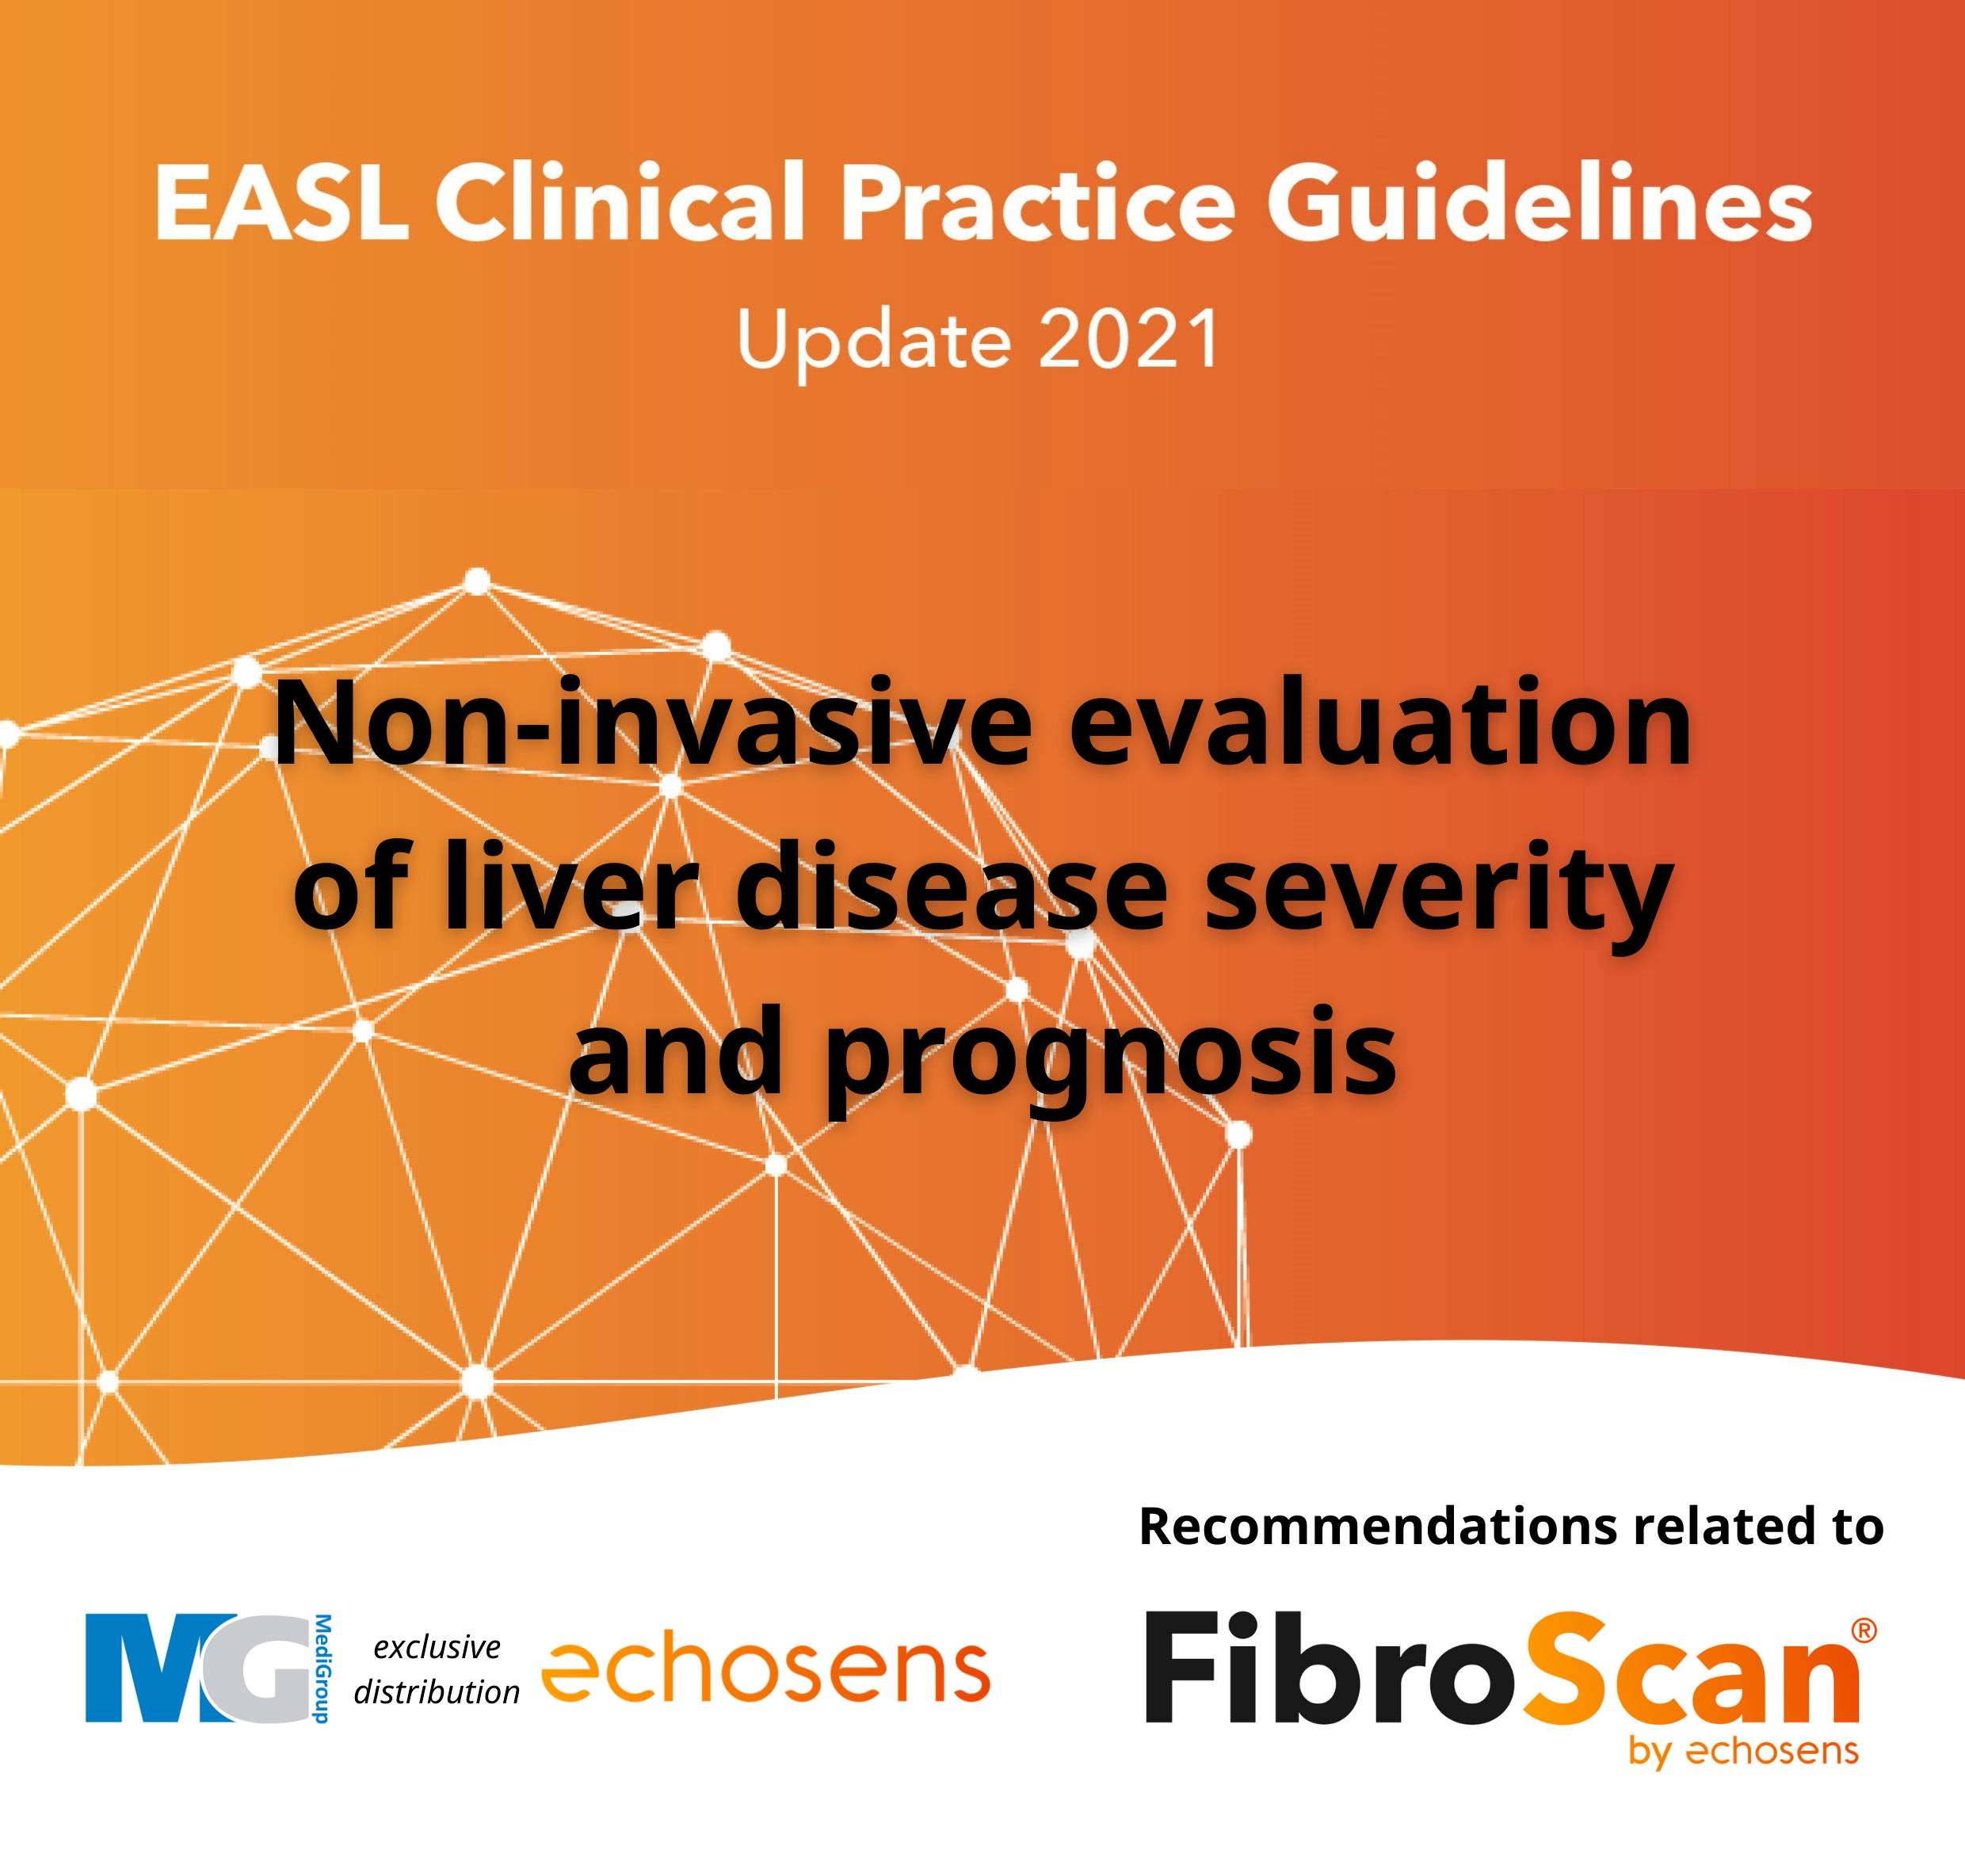 Non-invasive evaluation of liver disease severity and prognosis